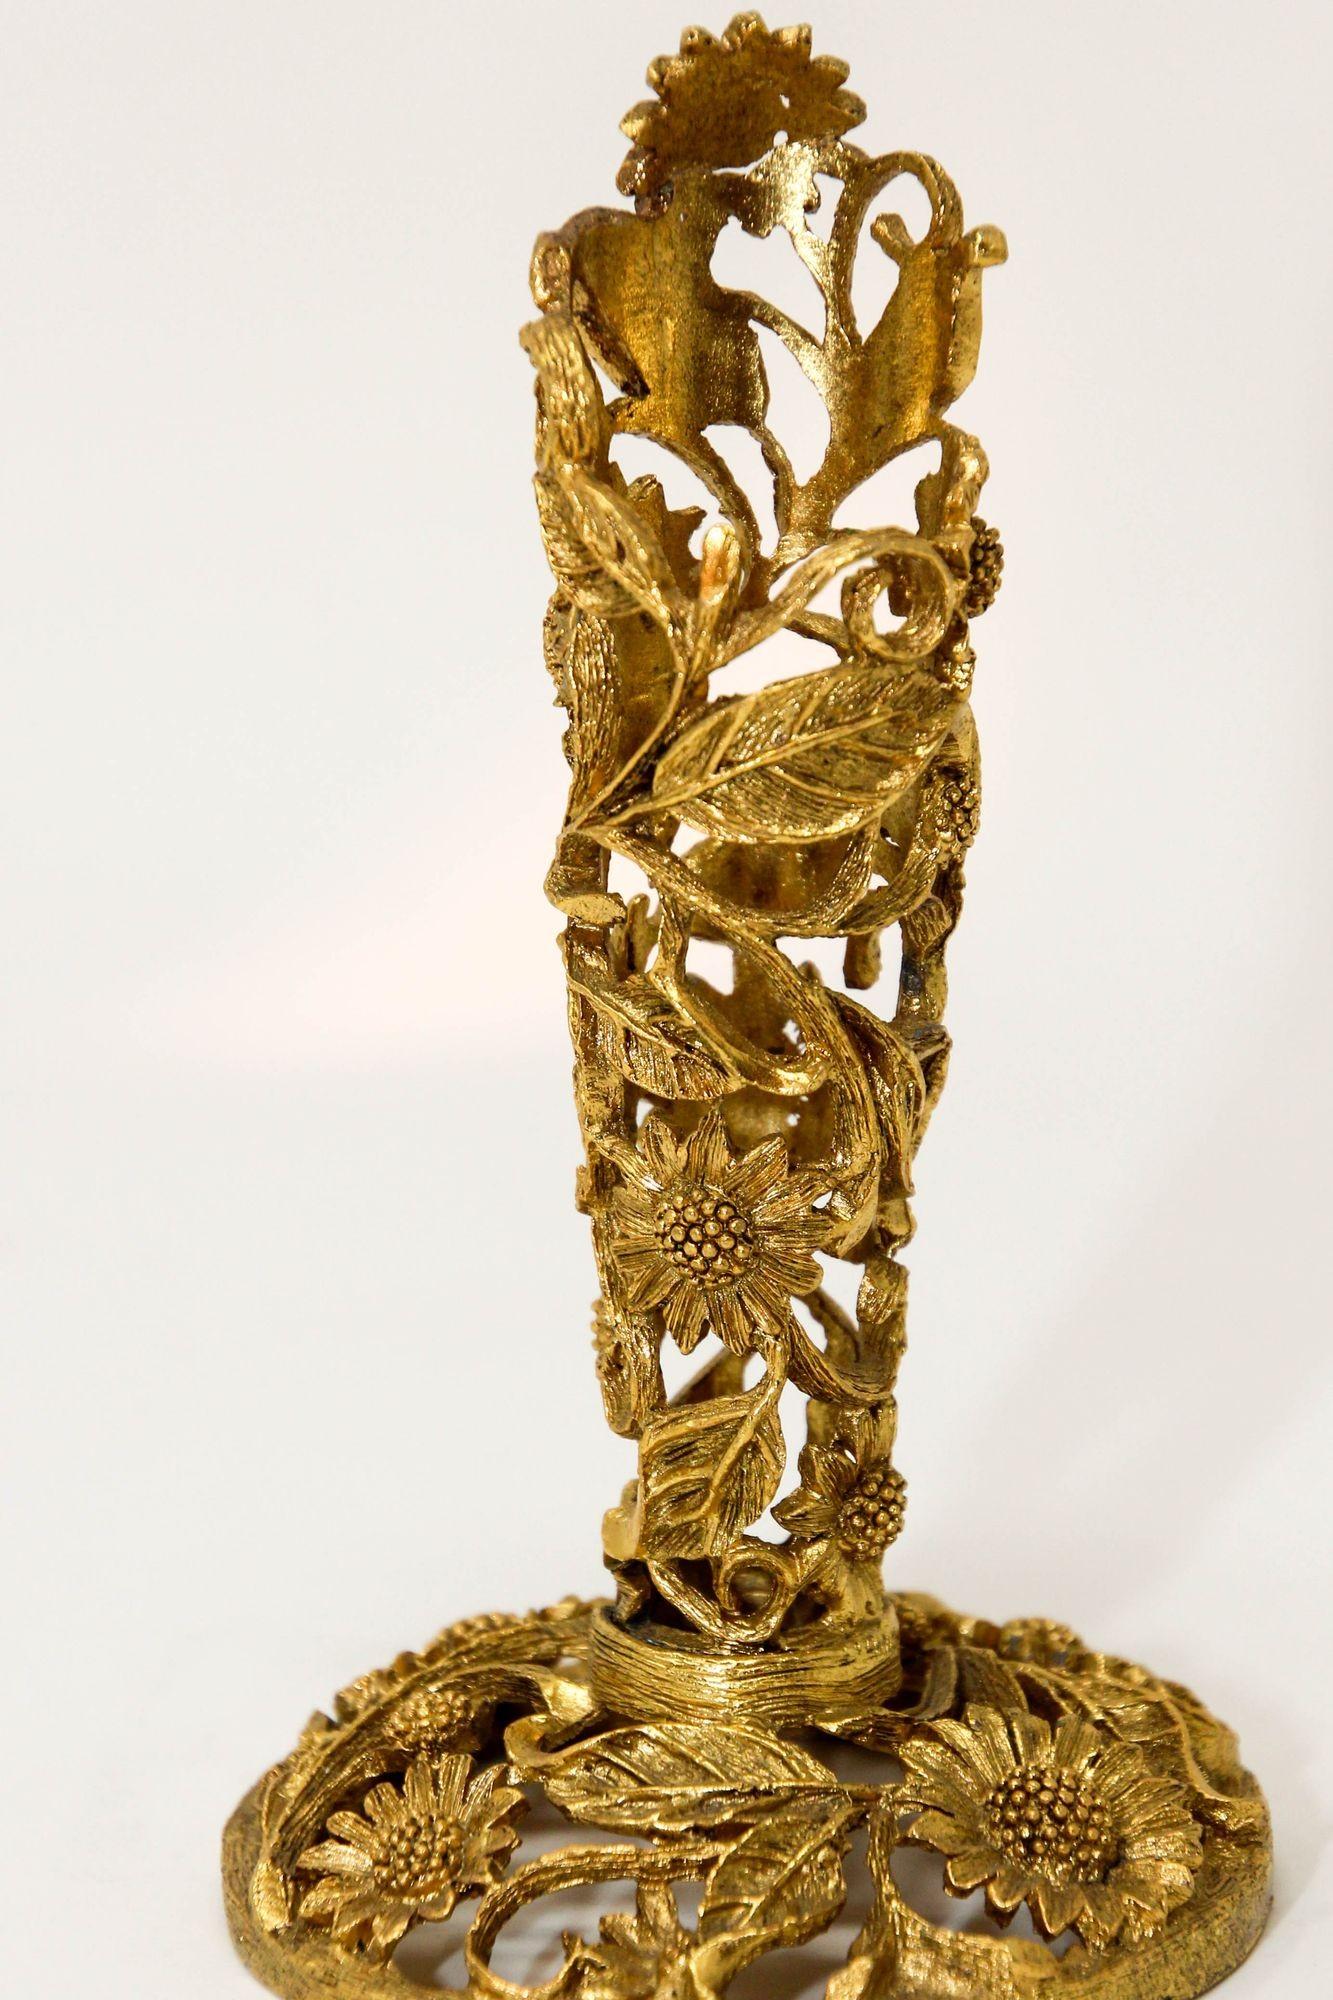 Vintage By1960s Ormolu Gold Tone Metal Filigree Bud Glass Vase Holder.
Magnifique porte-vase en métal filigrané doré.
Ce magnifique stand vintage en filigrane floral plaqué or 24K de Ormolu Matson date de la fin des années 1940.
Porte-fleurs